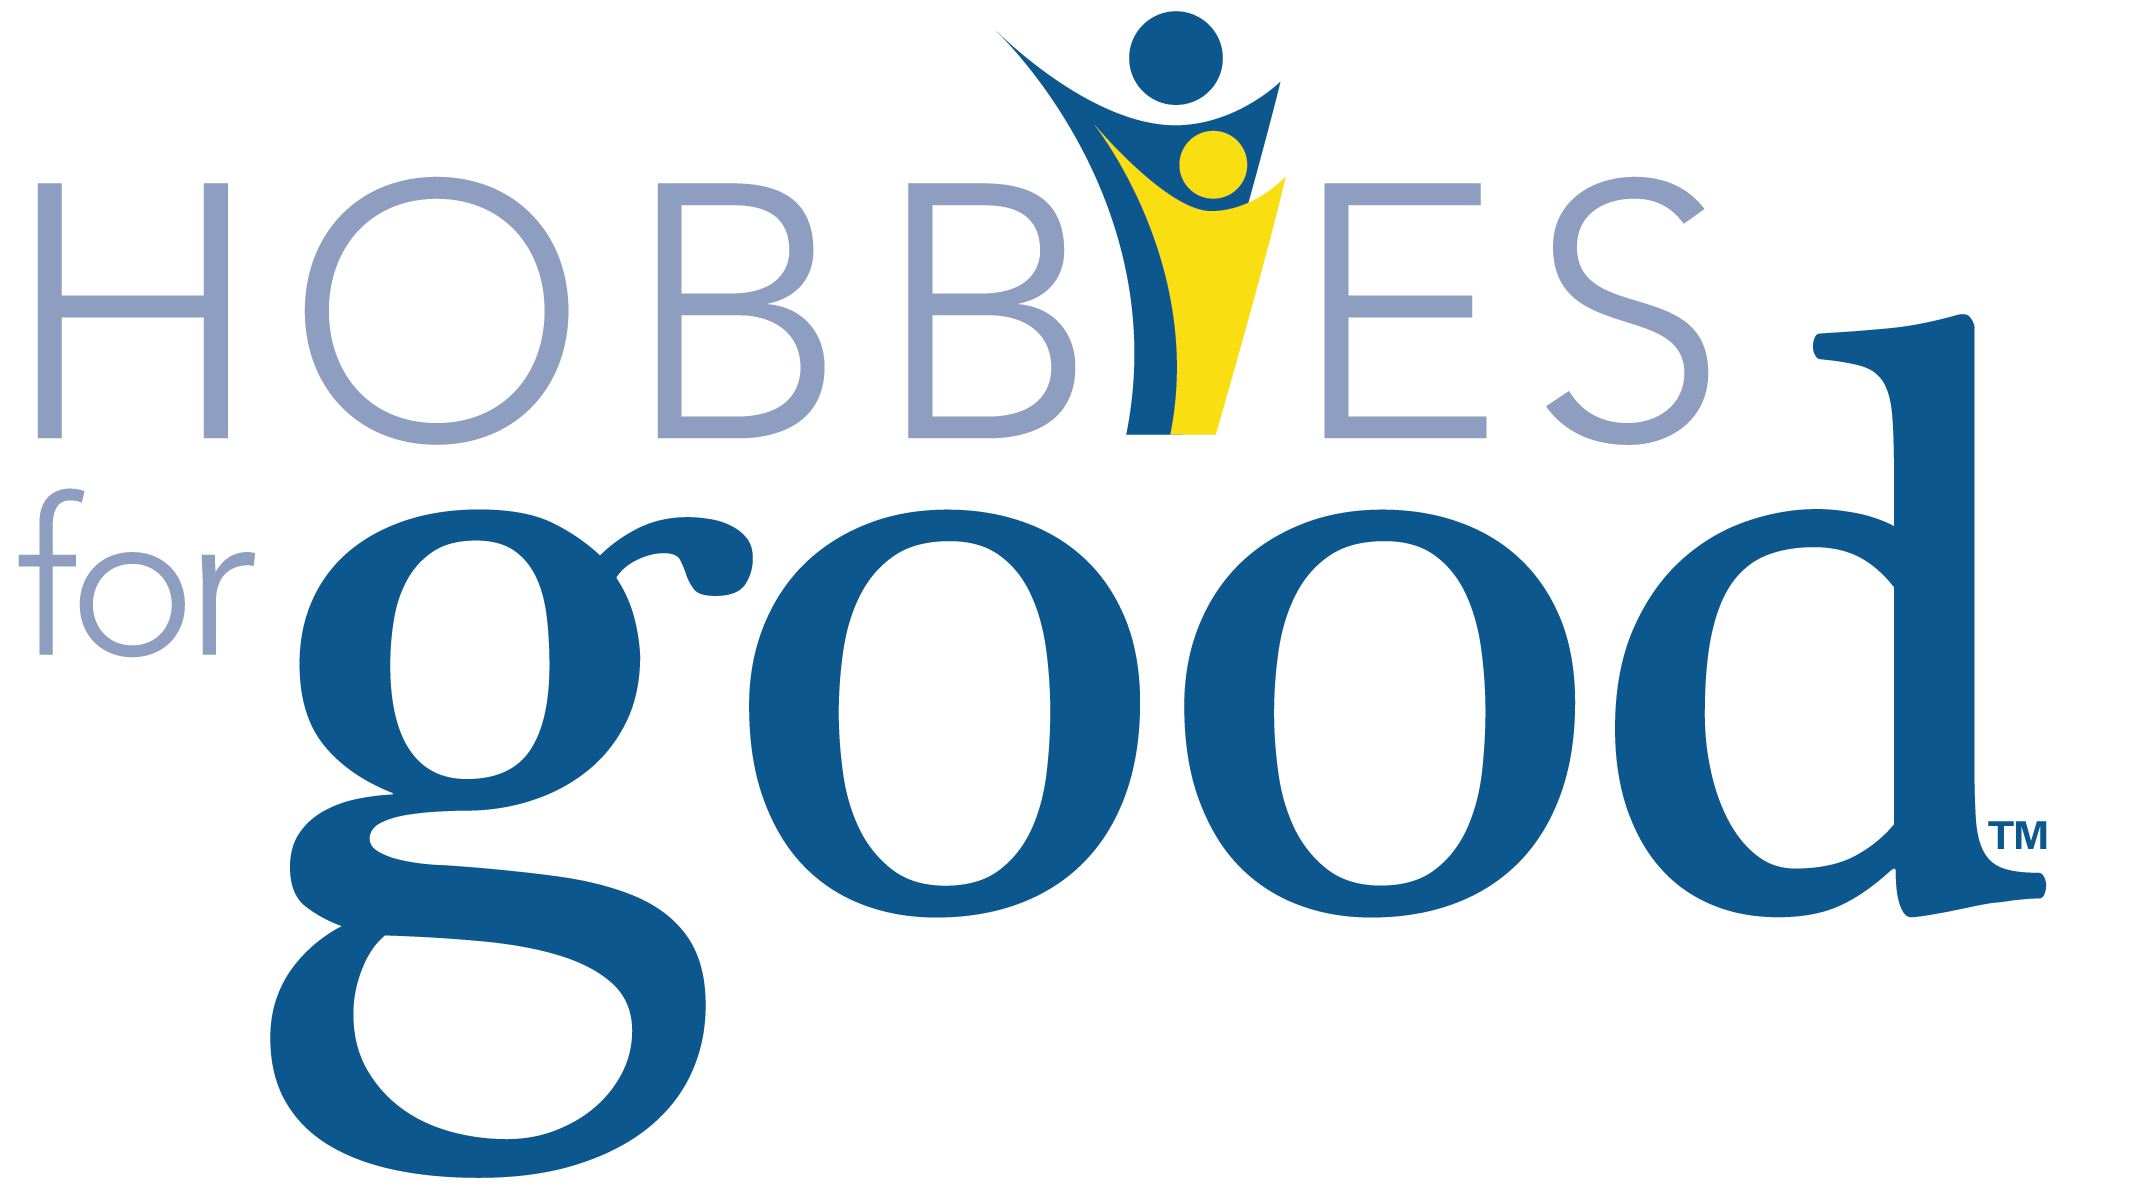 Hobbies For Good Logo